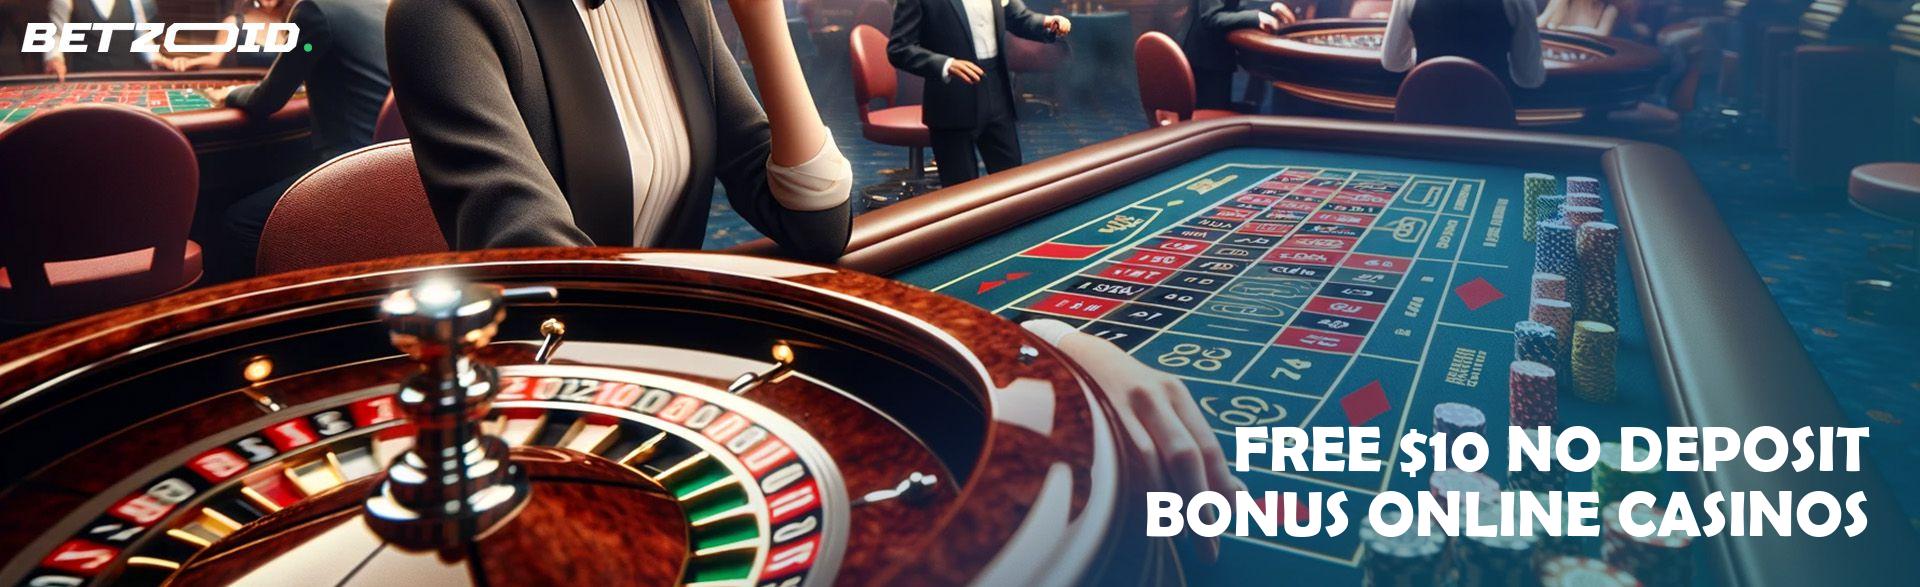 Free $10 No Deposit Bonus Online Casinos.